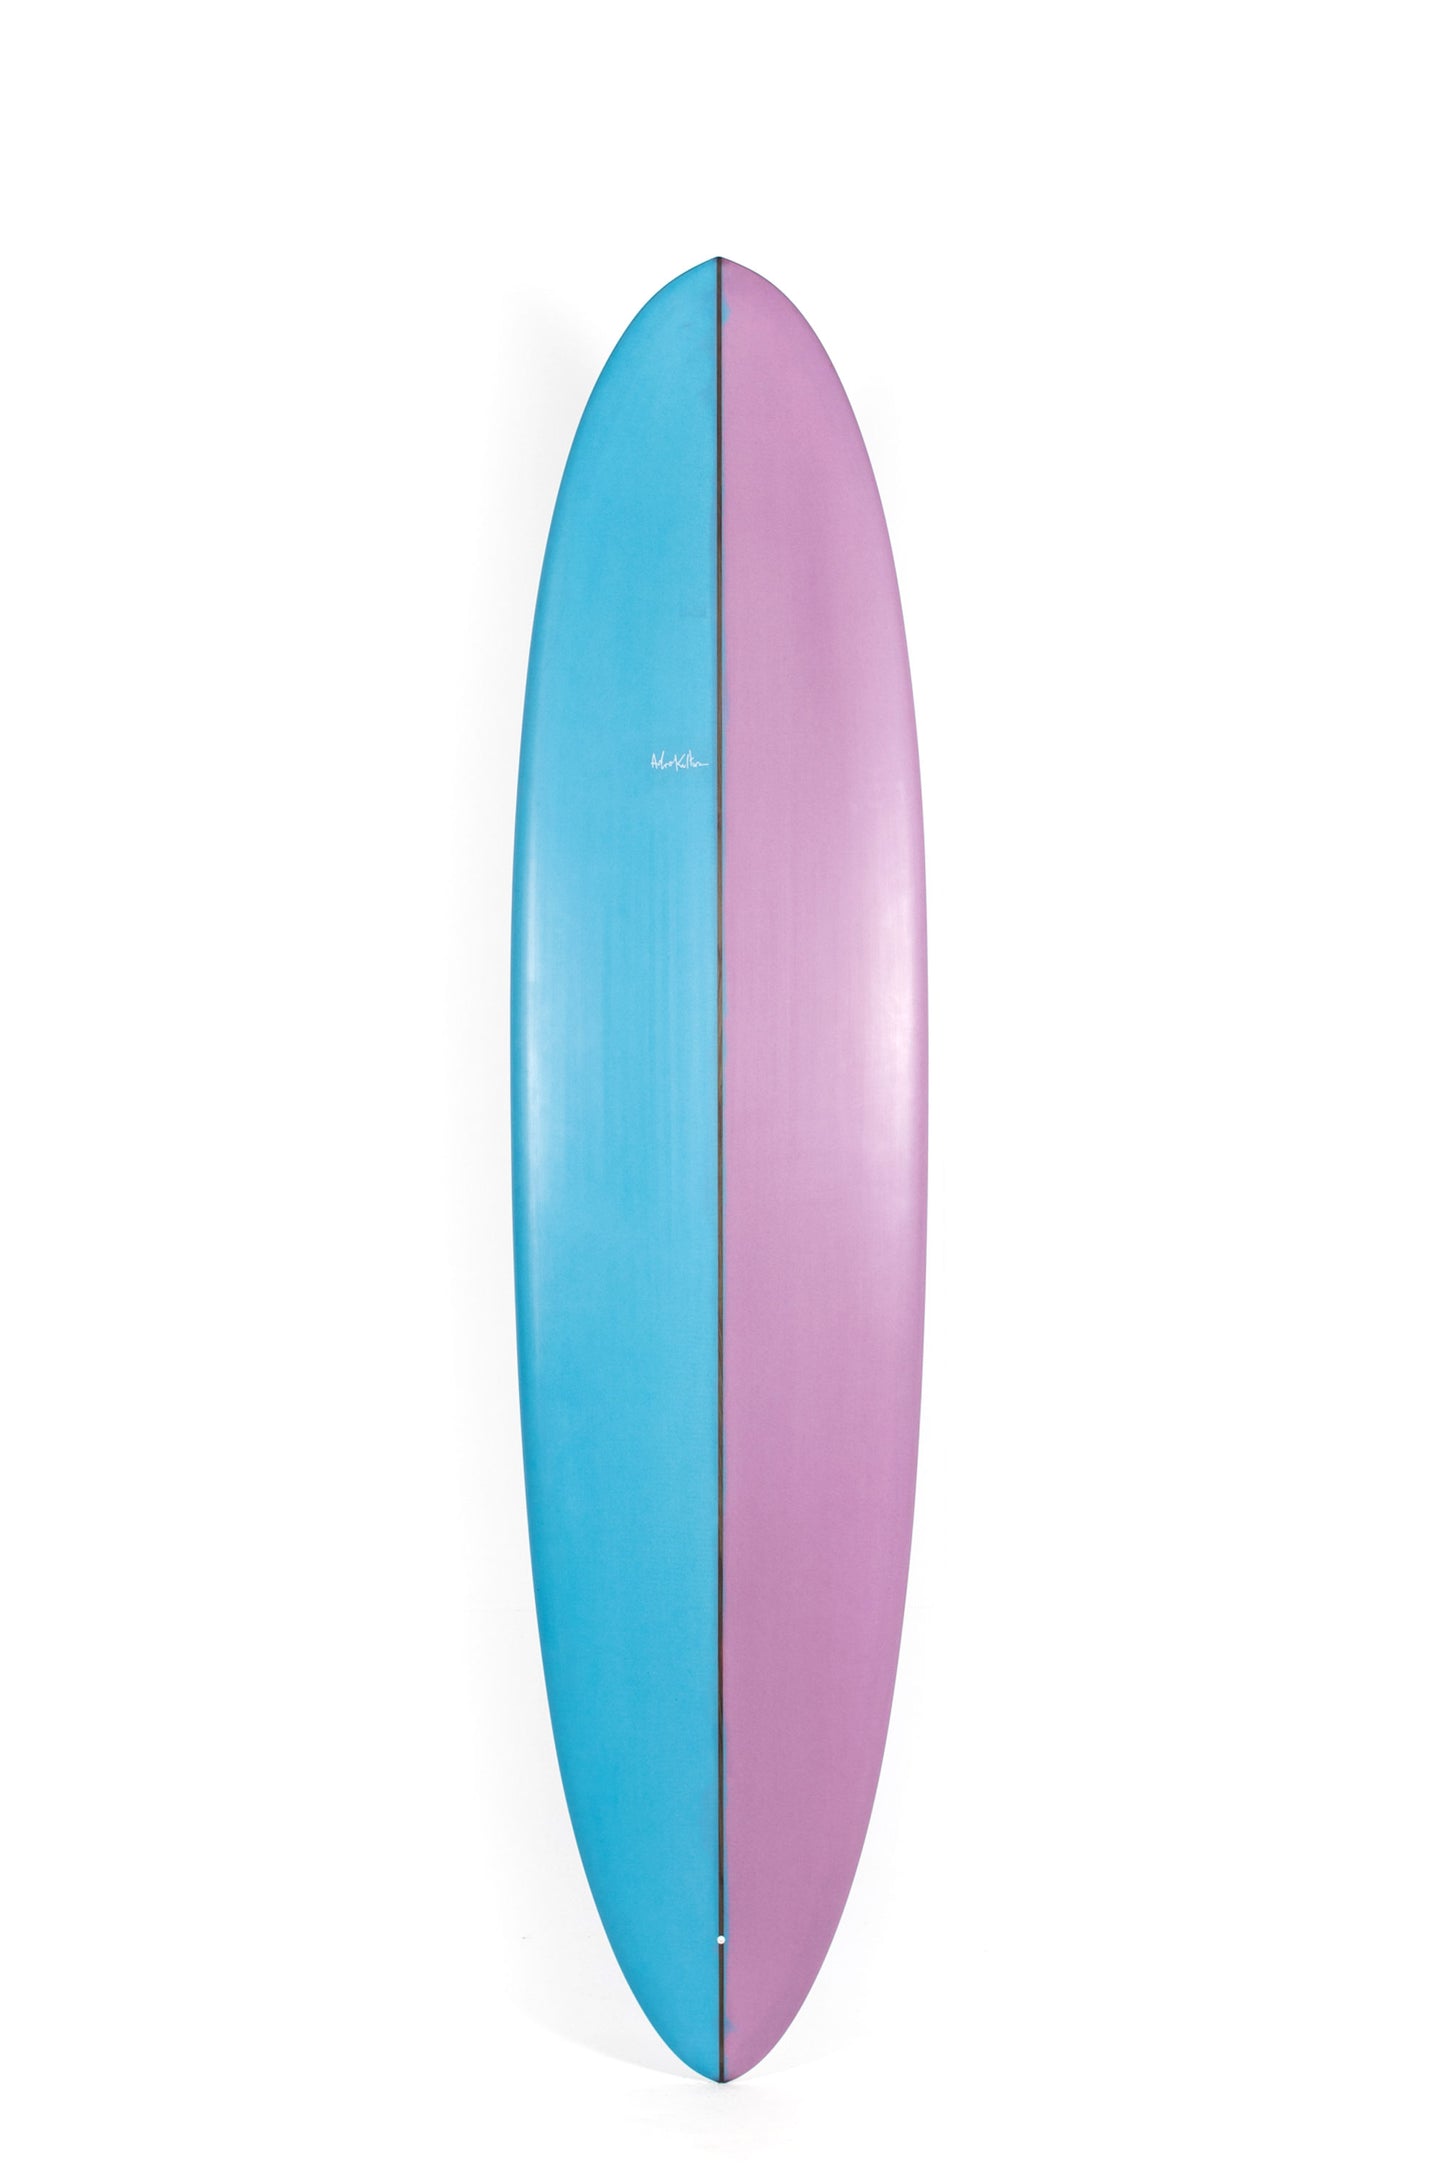 Pukas Surf Shop - Adrokultura Surfboards - SINGLE EGG - 8'1" x 22 1/2 x 3 - SINGLEEGG81